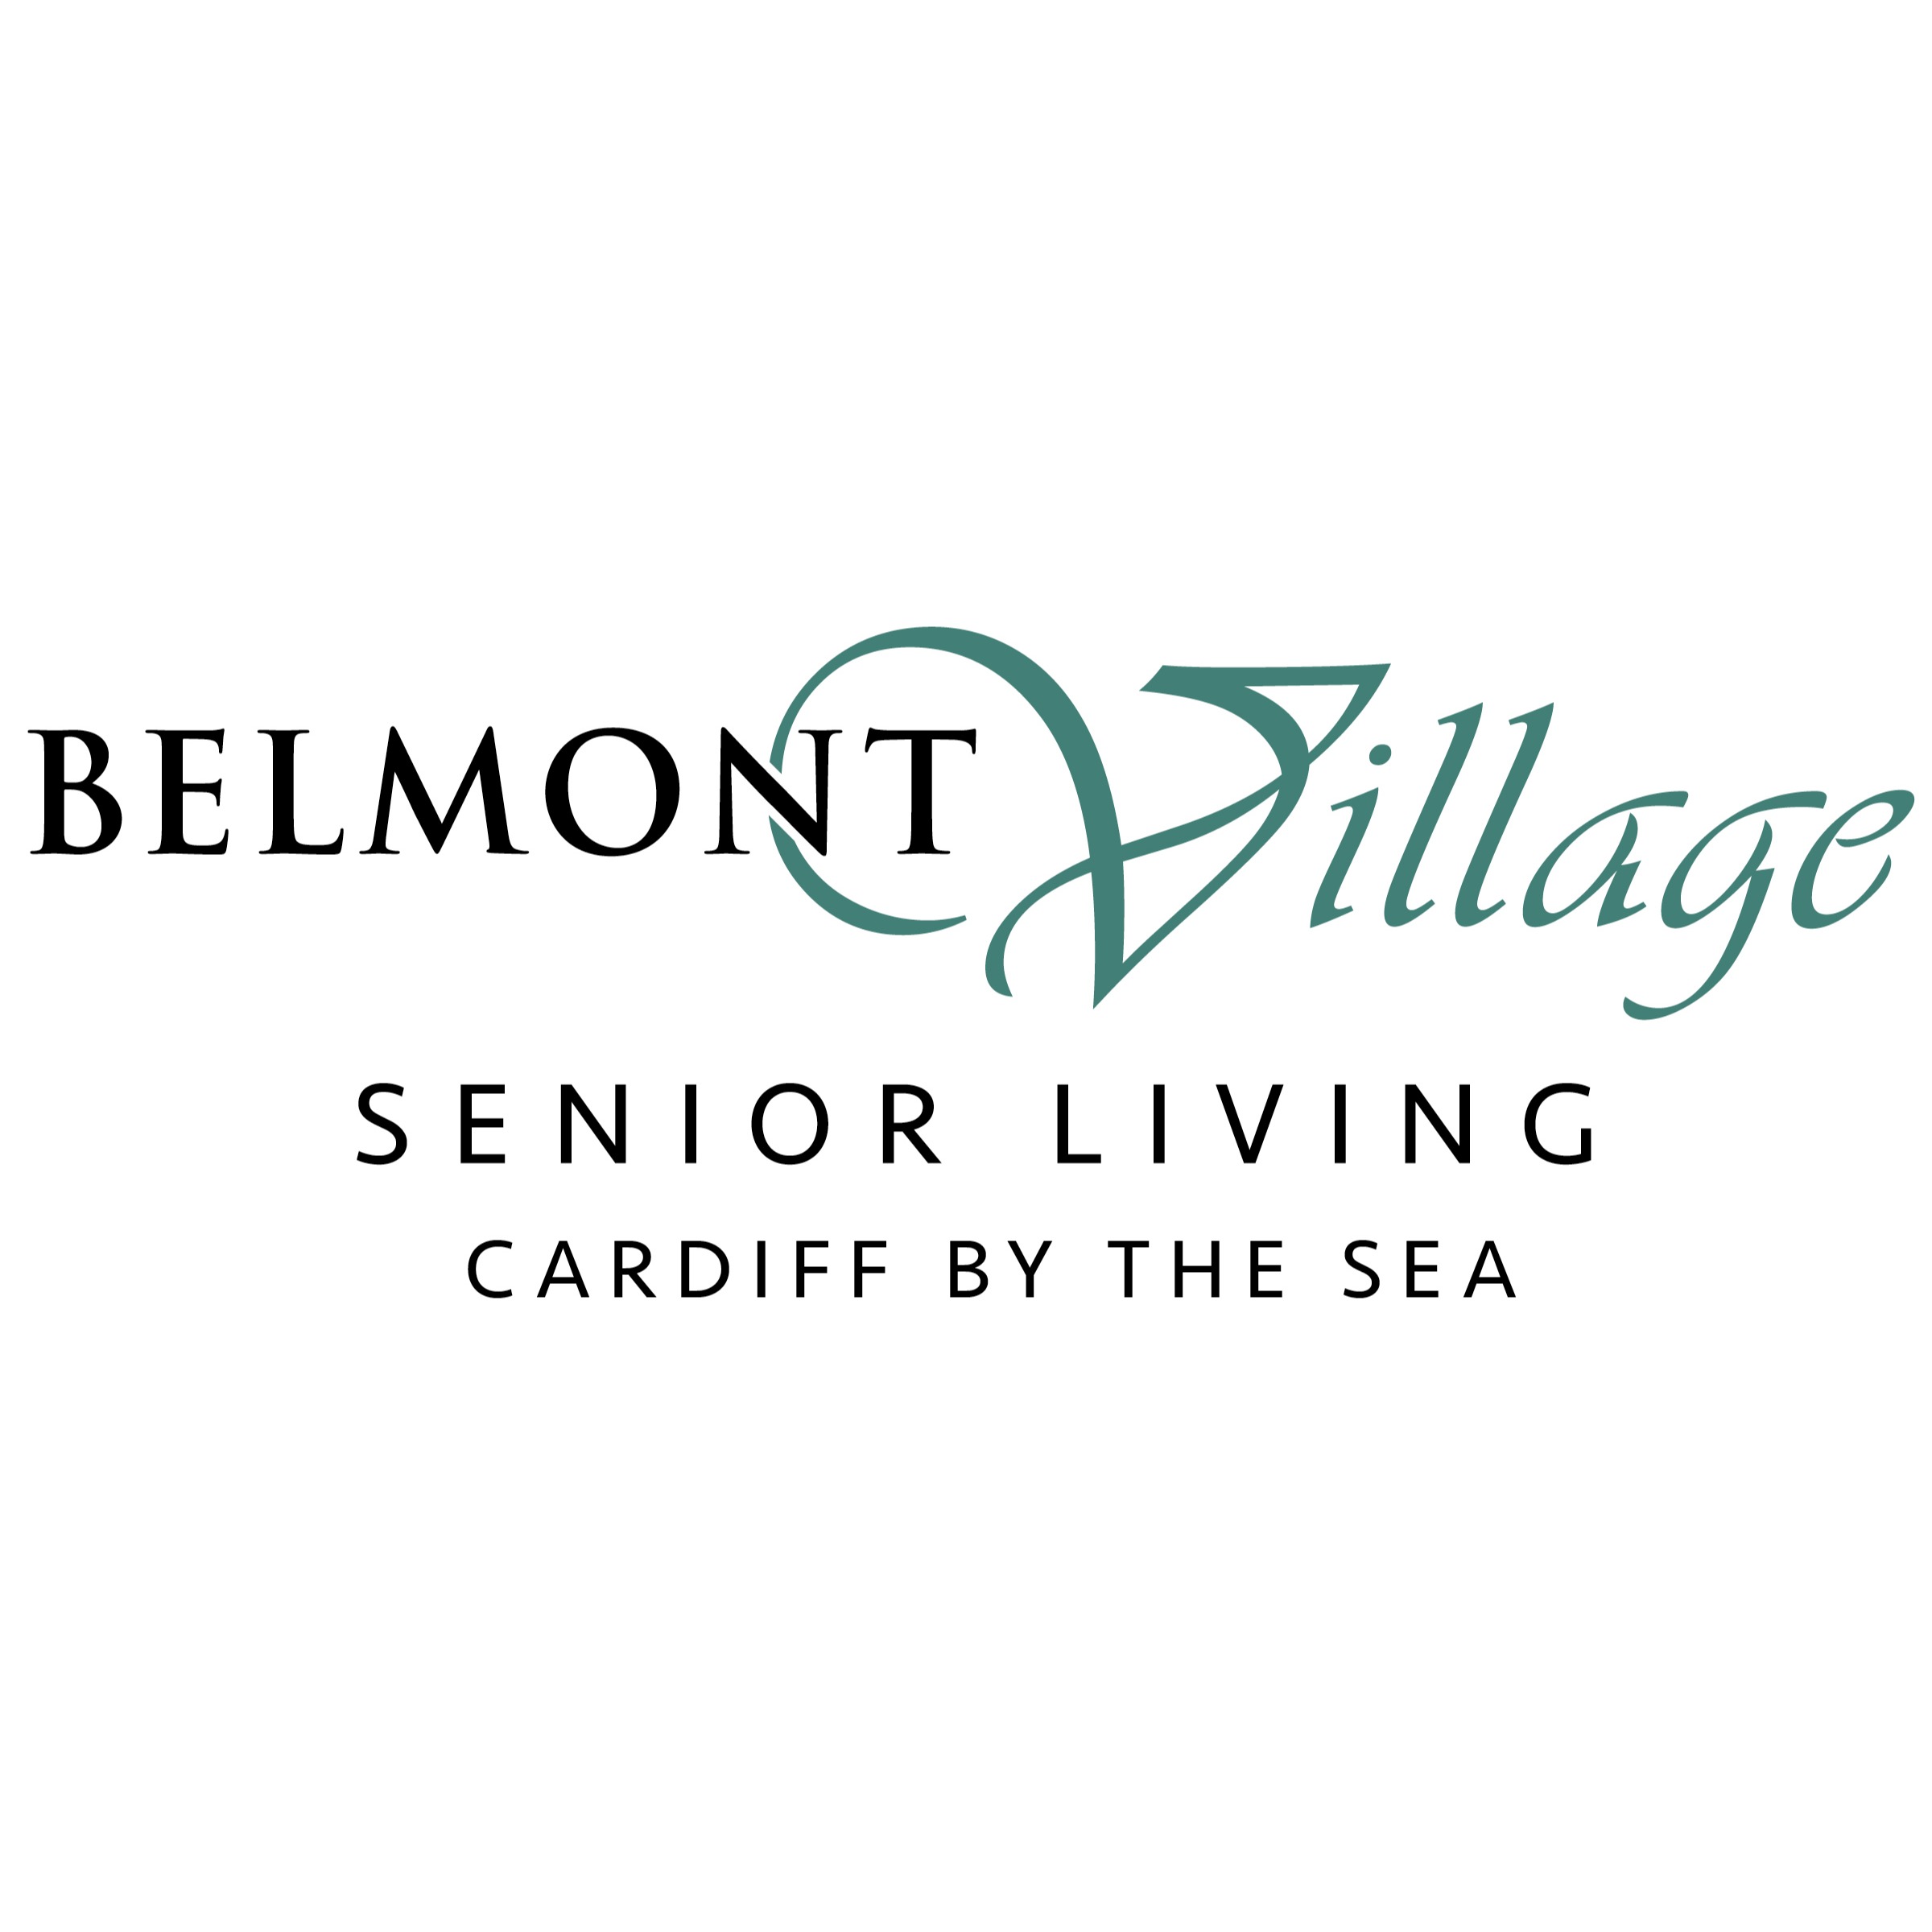 Belmont Village Senior Living Cardiff by the Sea